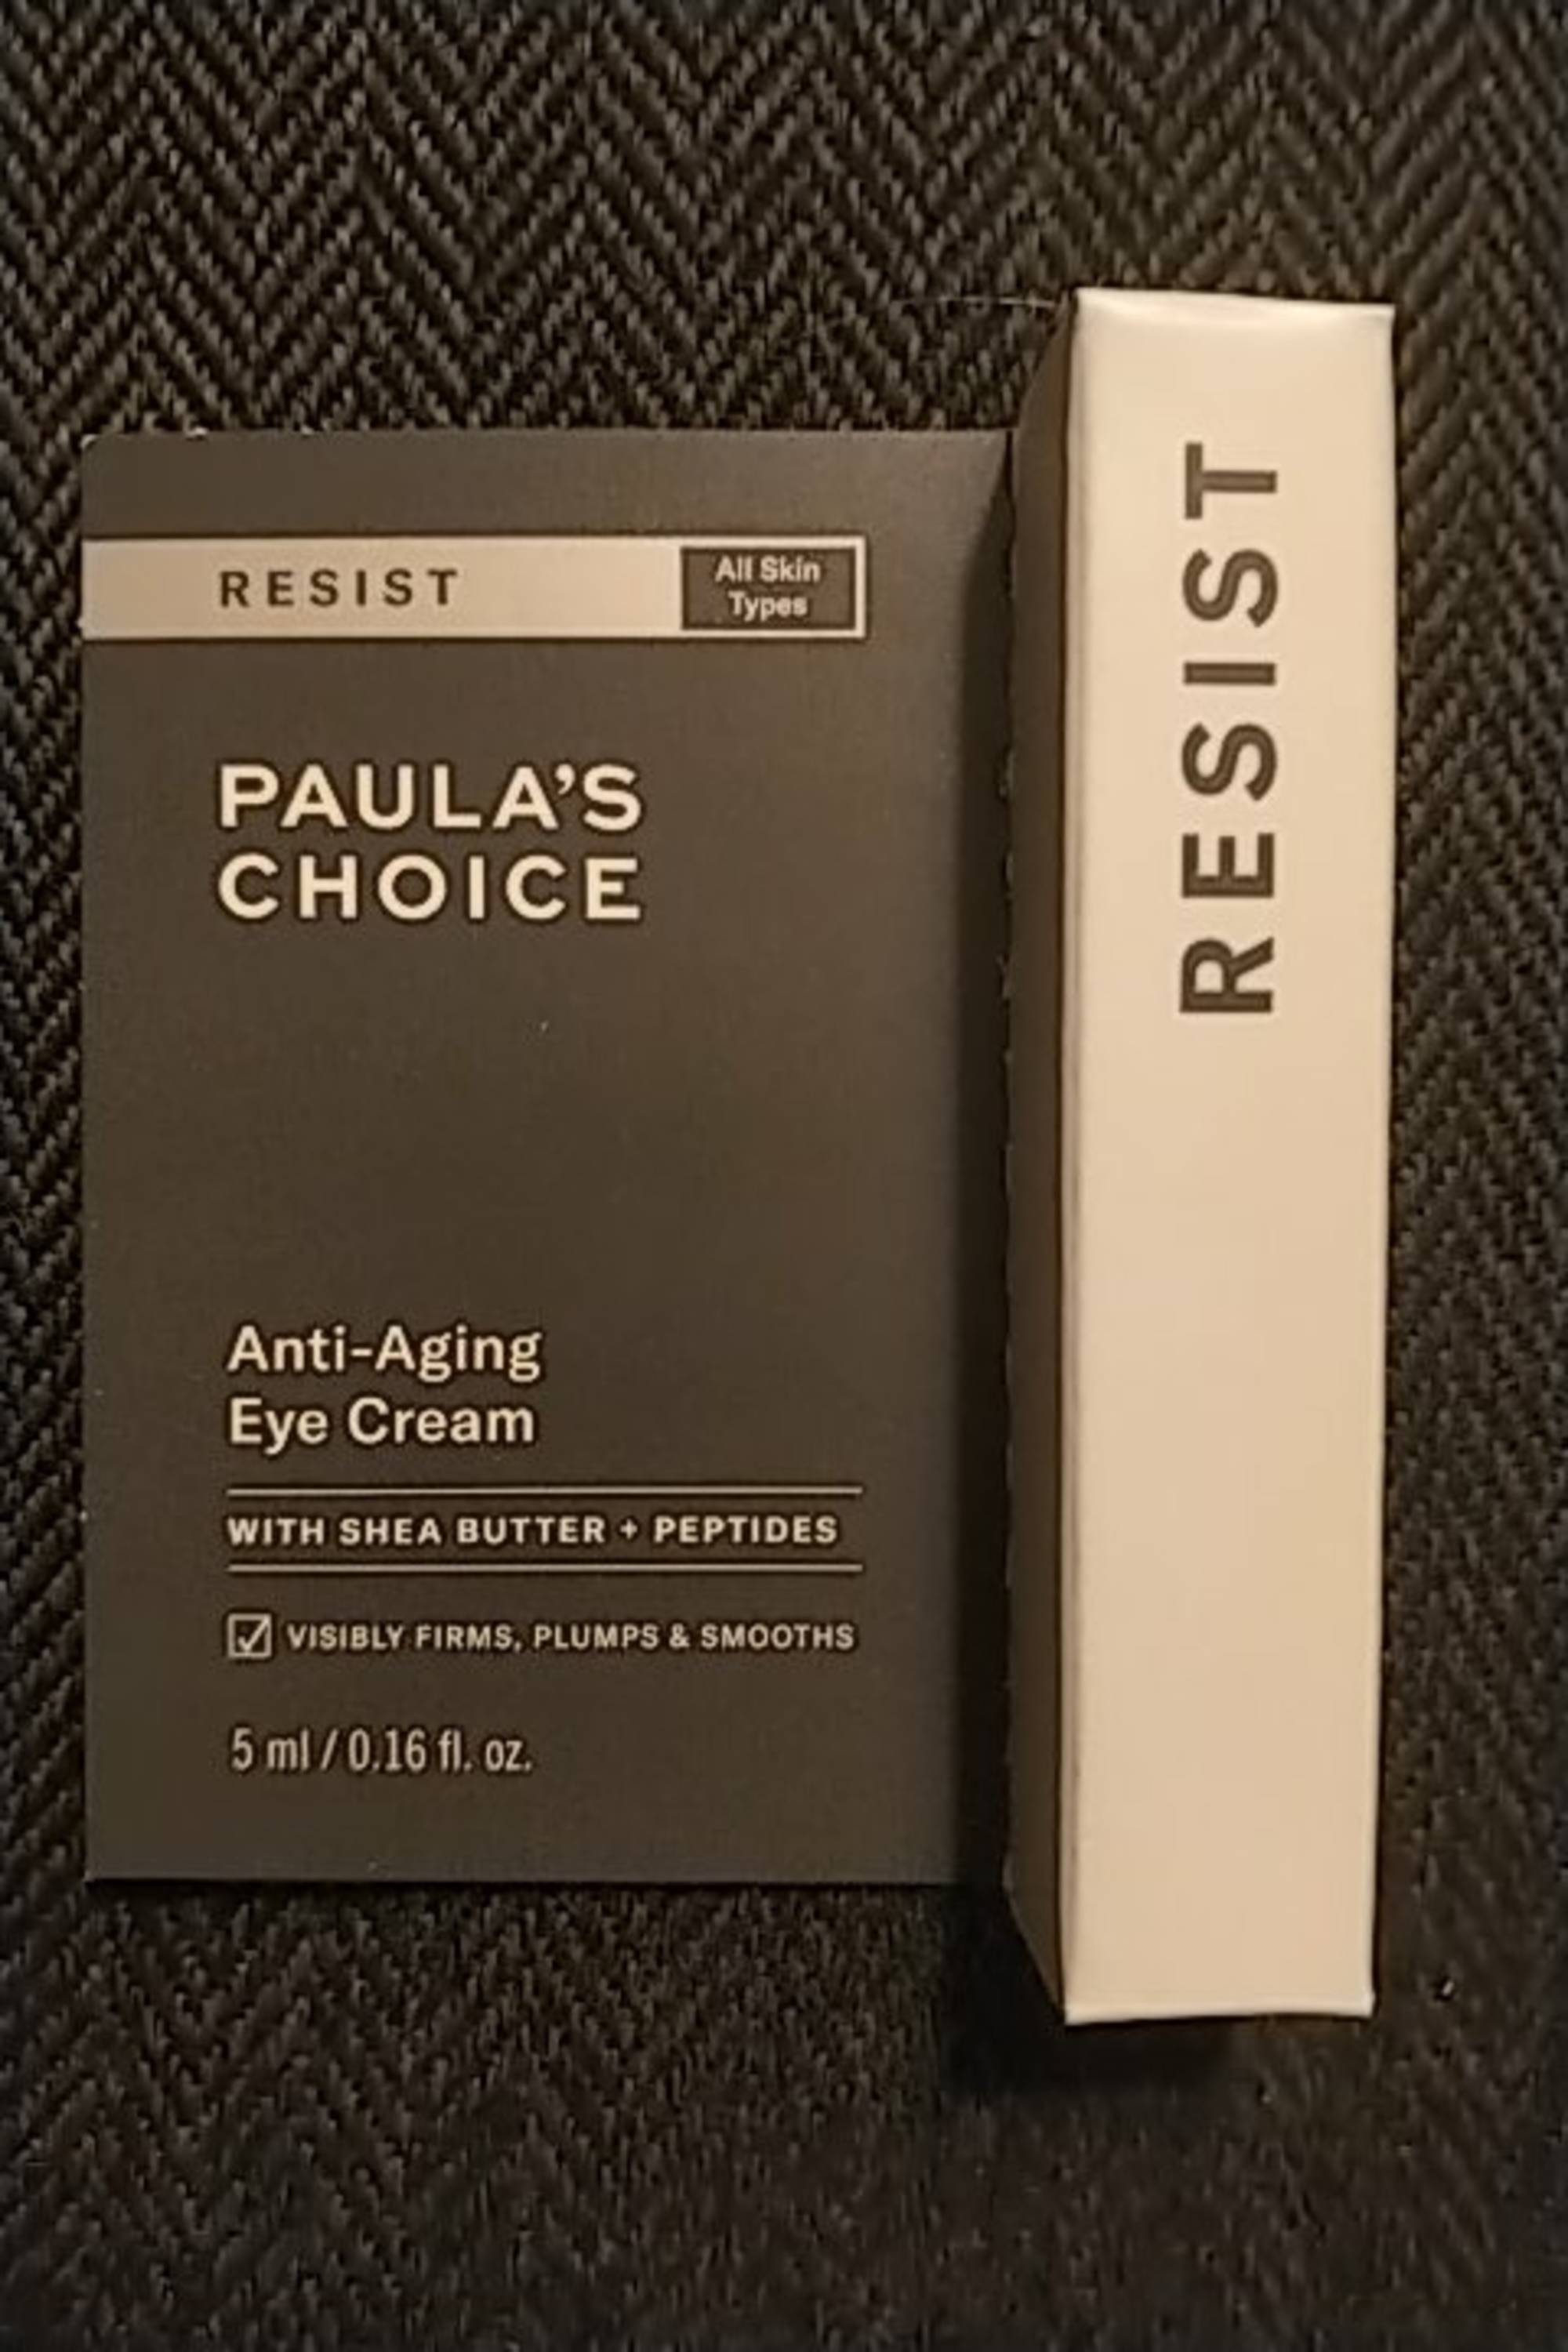 PAULA'S CHOICE - Resist - Anti-aging eye cream